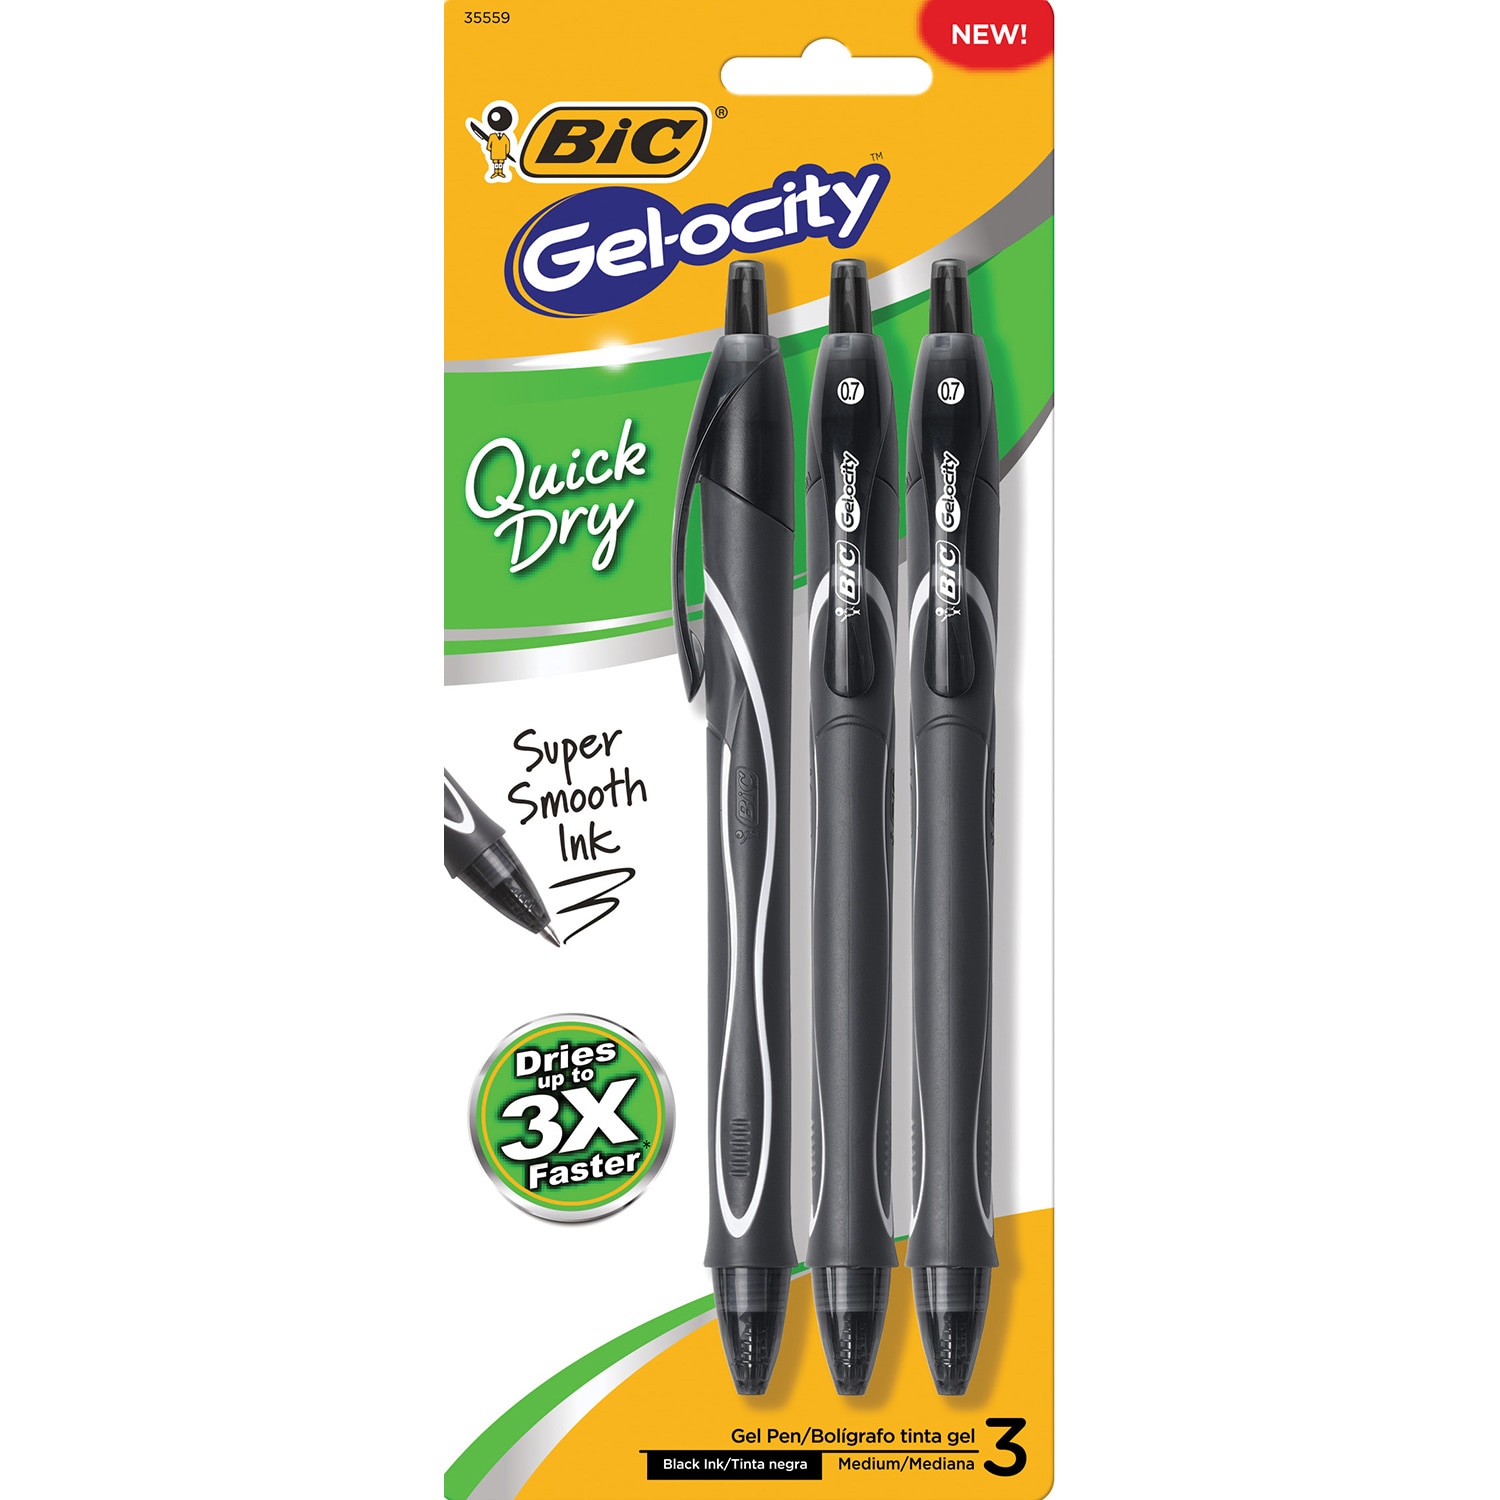 BIC - Gelocity Quick Dry Pen - Black